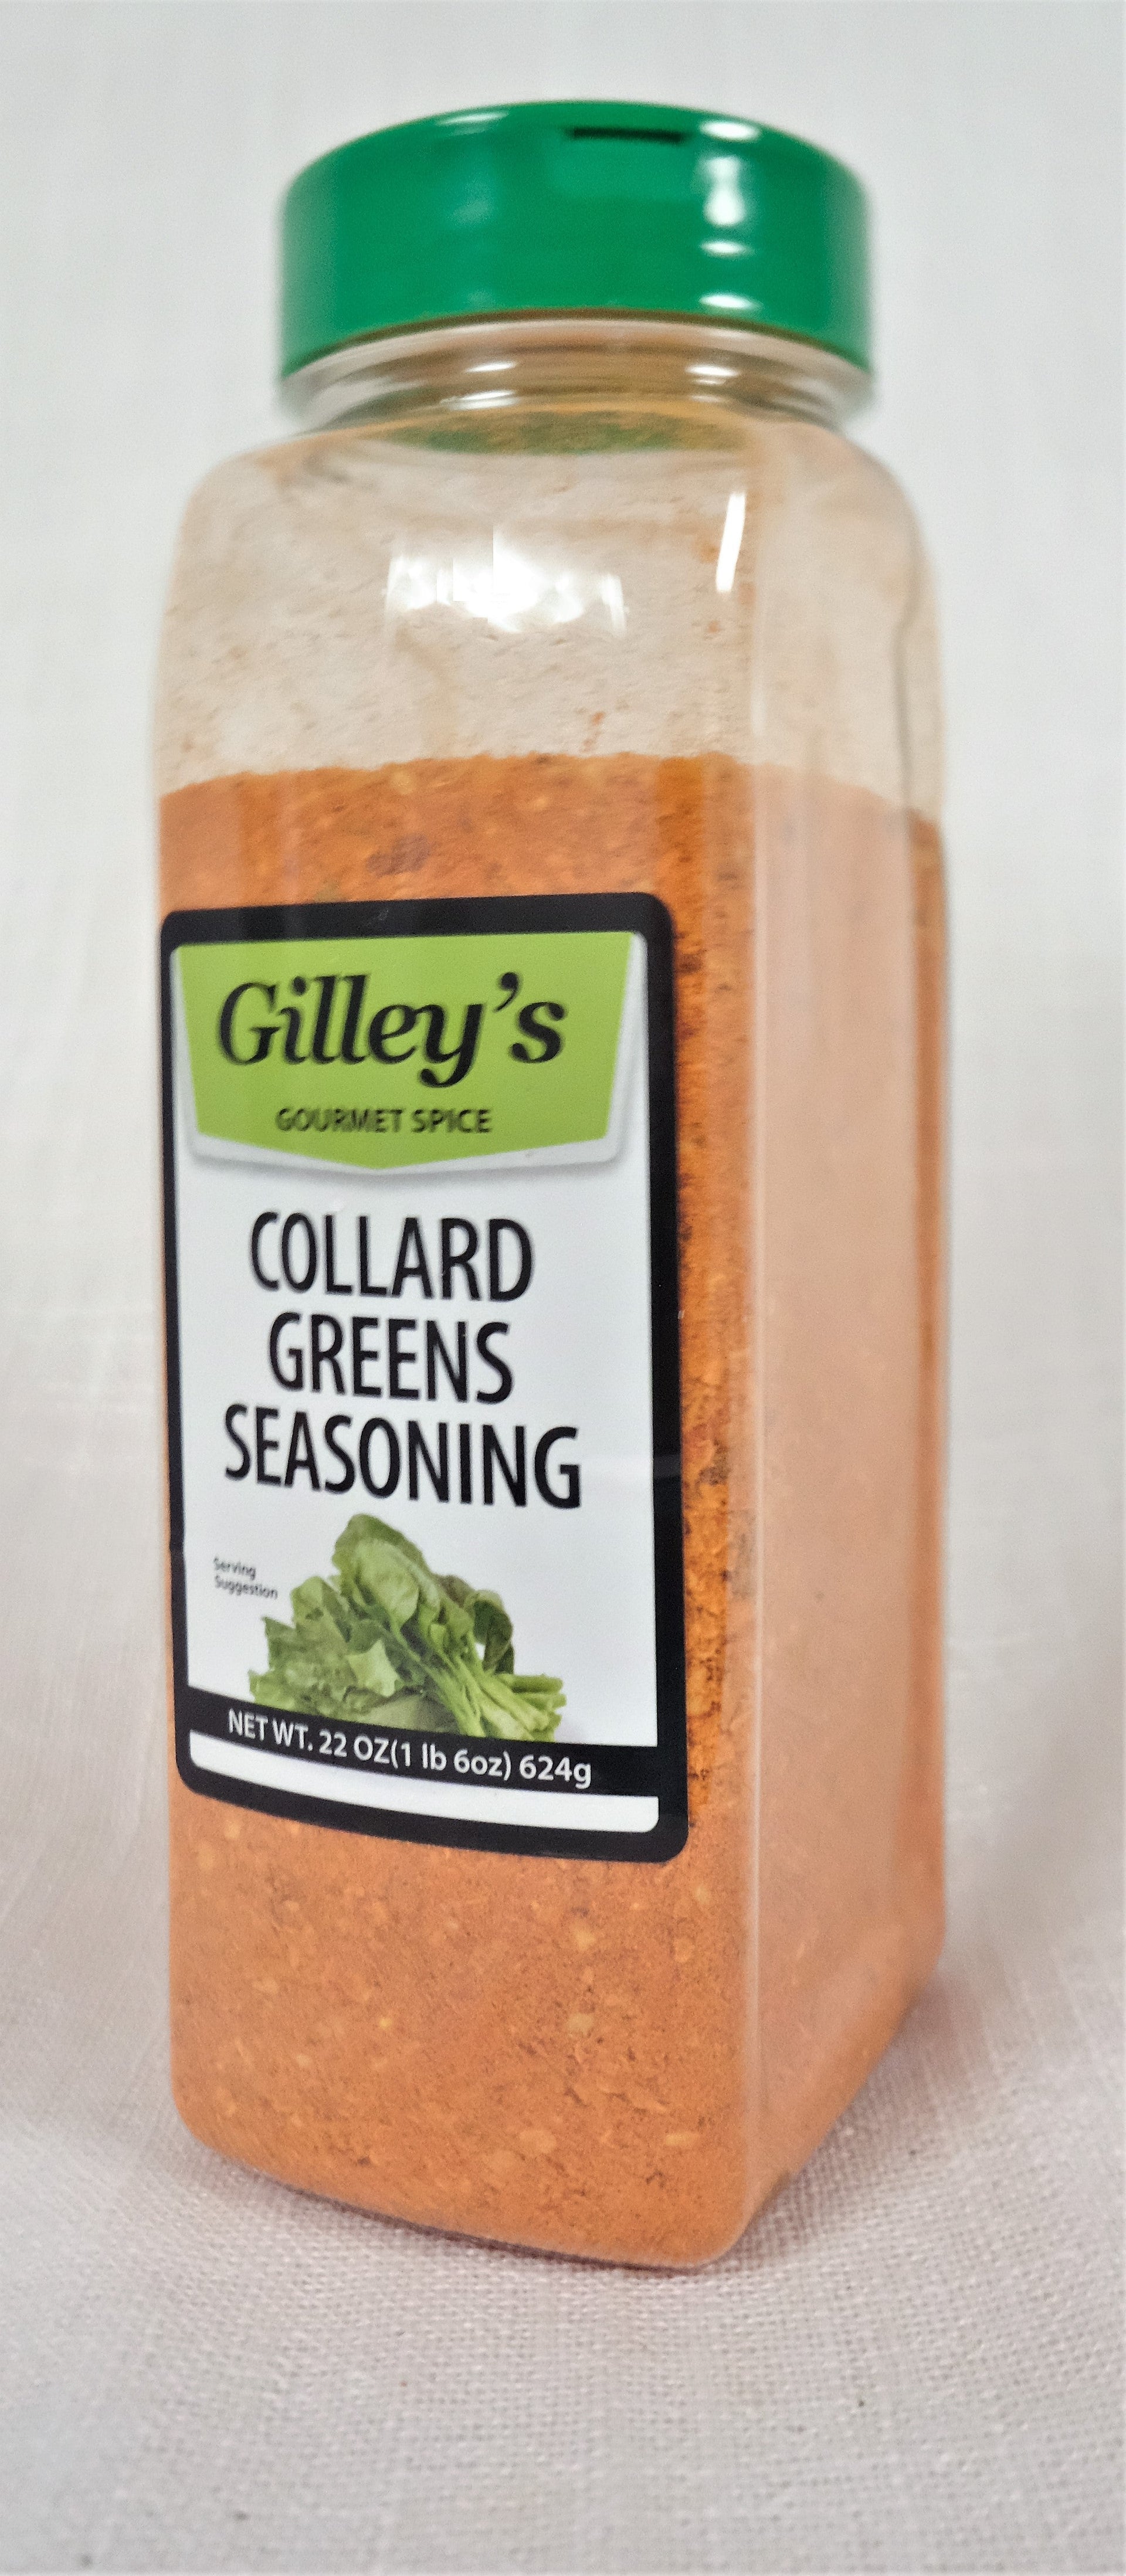 Collard Green Seasoning